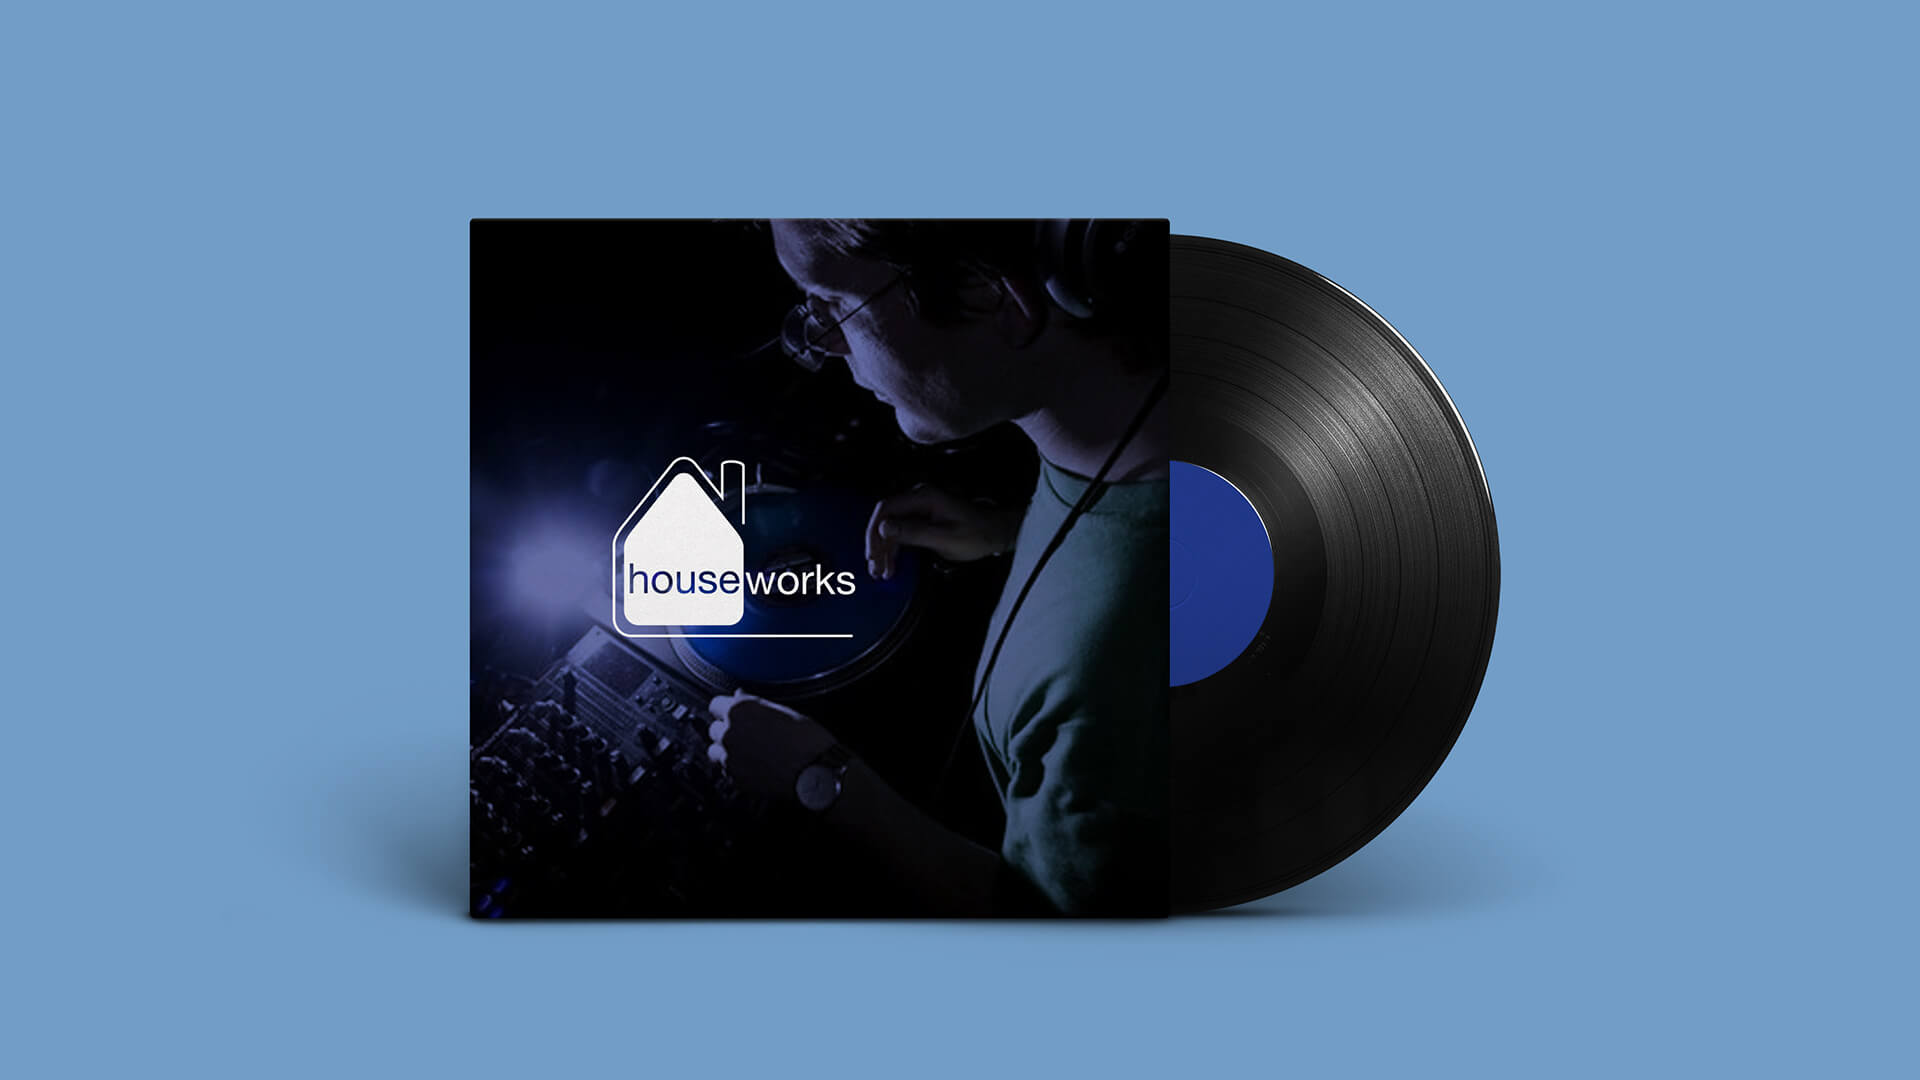 Houseworks Logo on a LP Sleeve